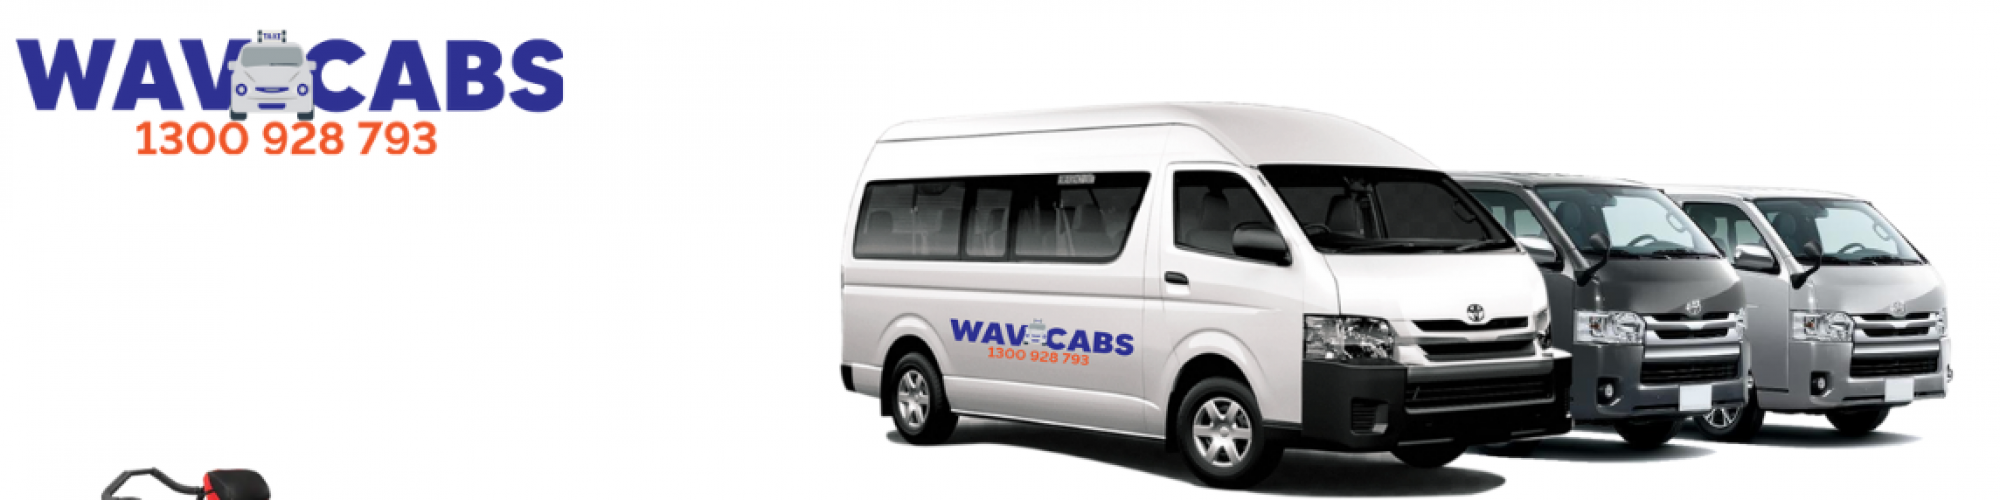 Wavmaxi Cabs